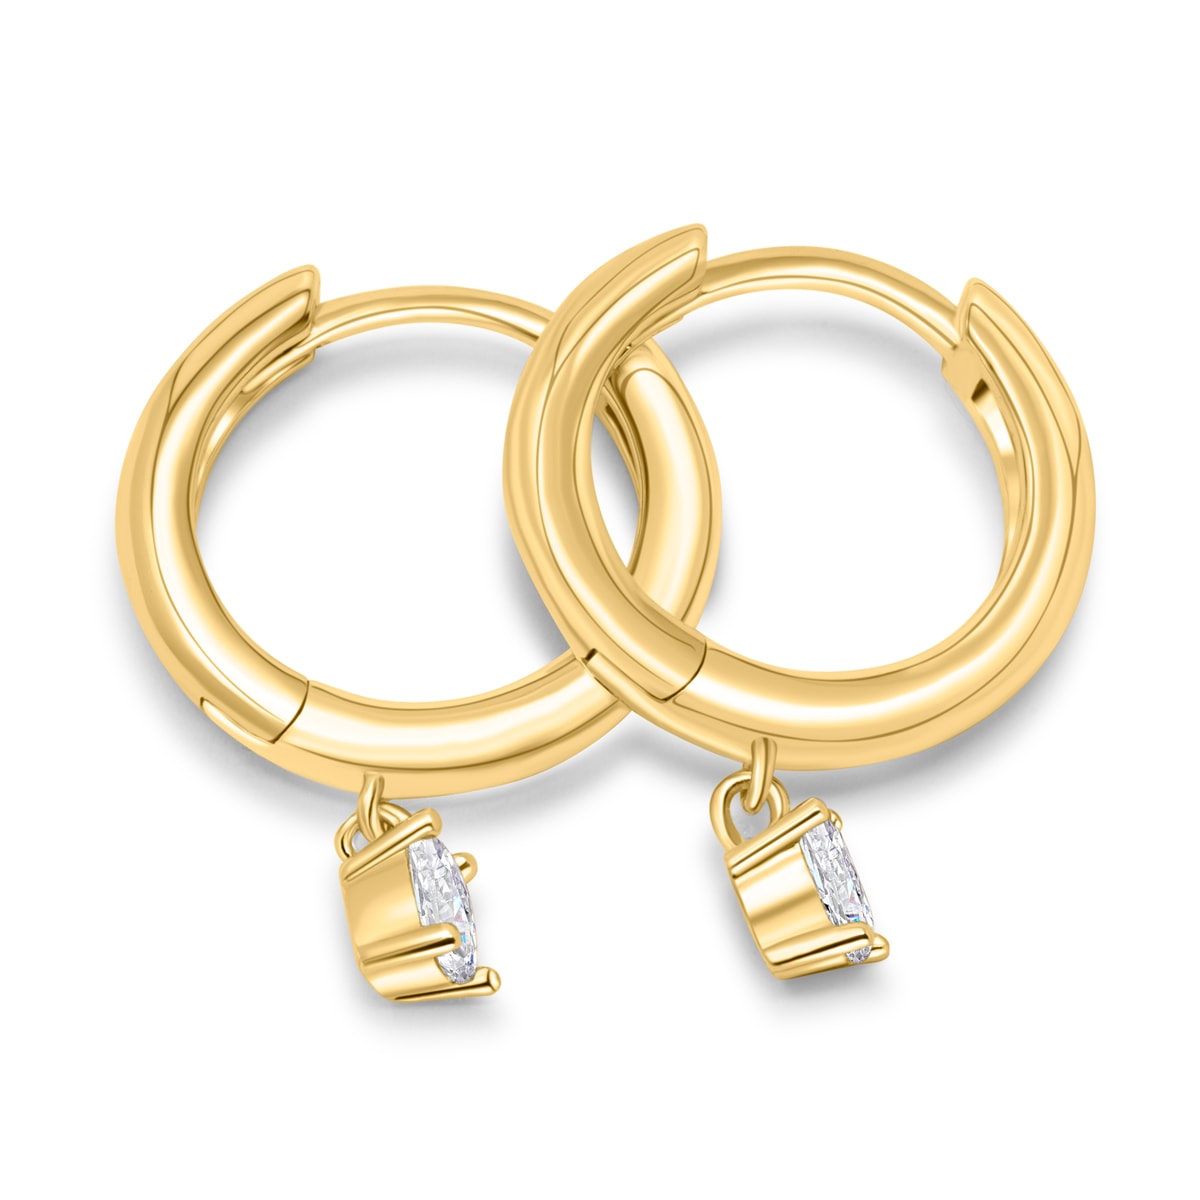 Small gold pendant earrings